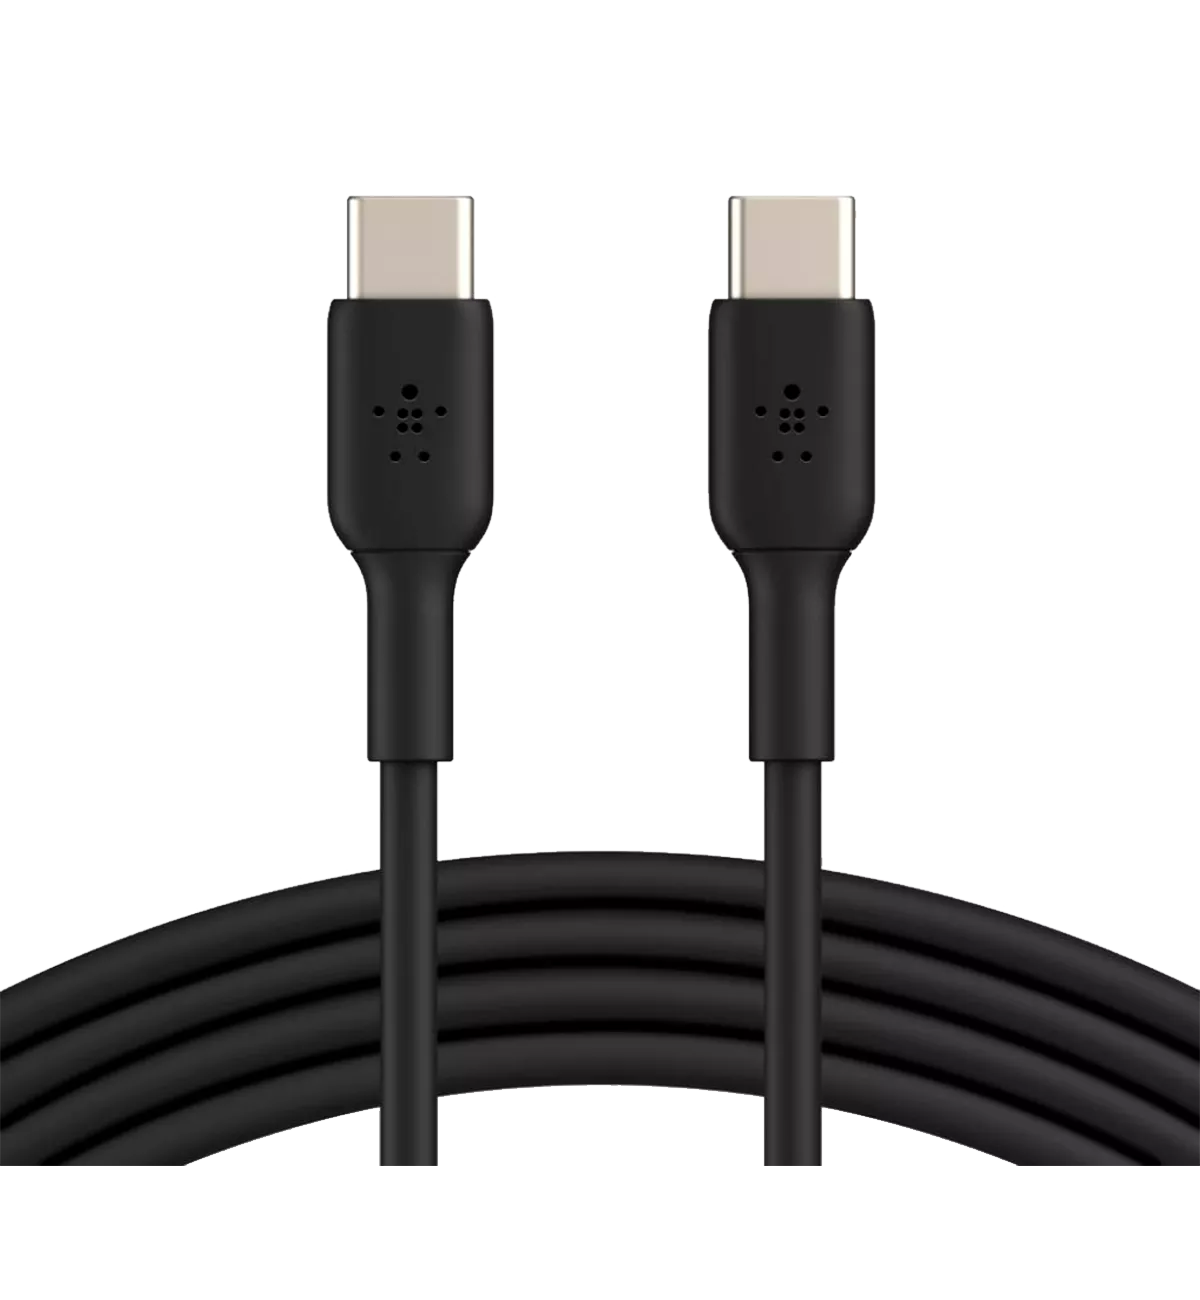 Дата кабель Belkin USB-С - USB-С, PVC, 2m, black (CAB003BT2MBK)